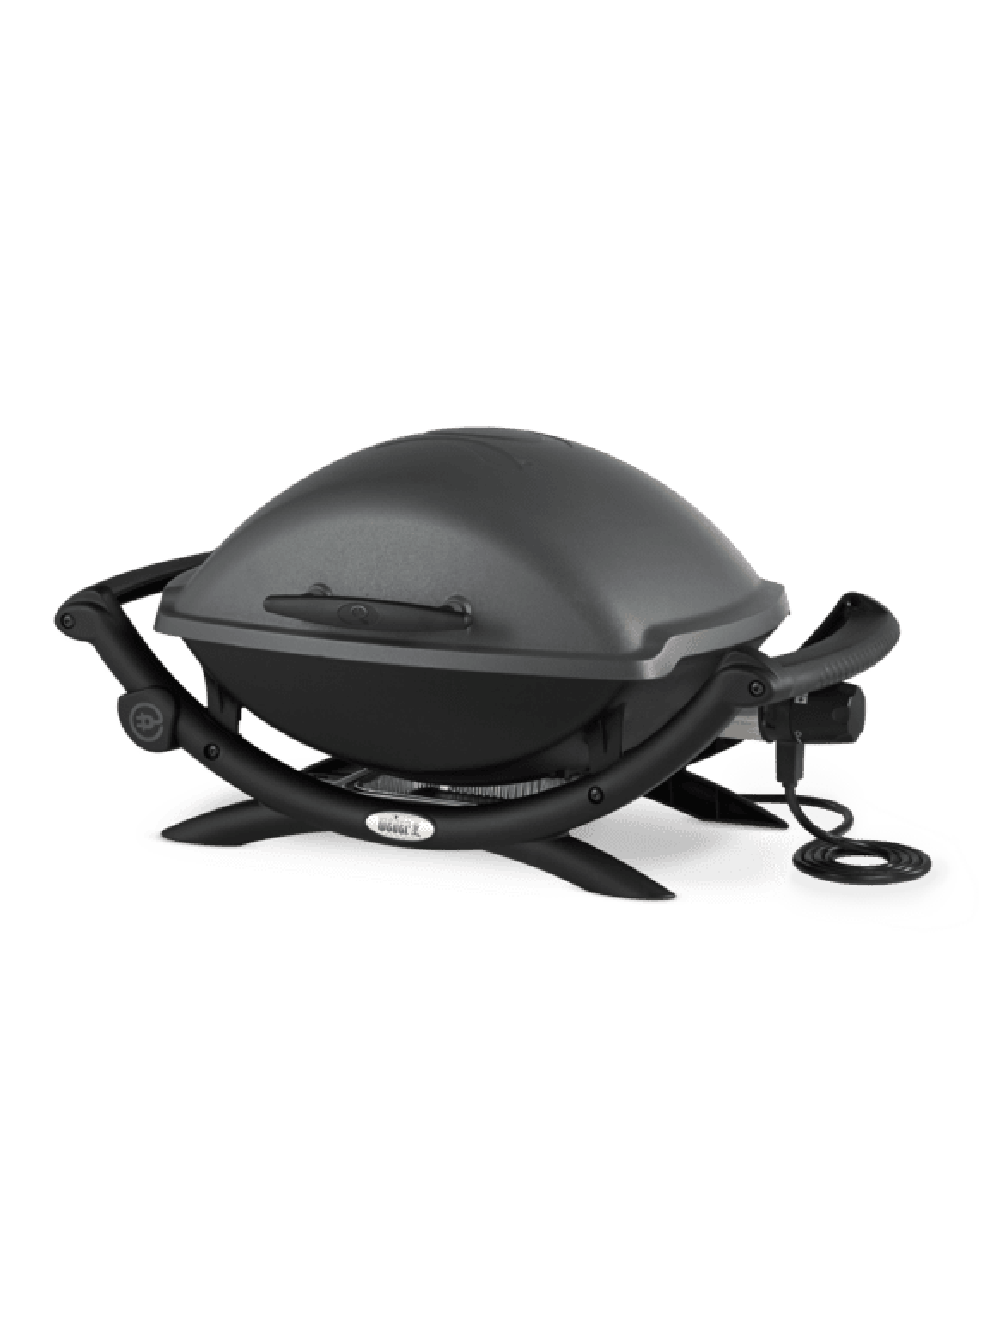 Weber® Q 2400 Electric Grill Chilliwack BBQ